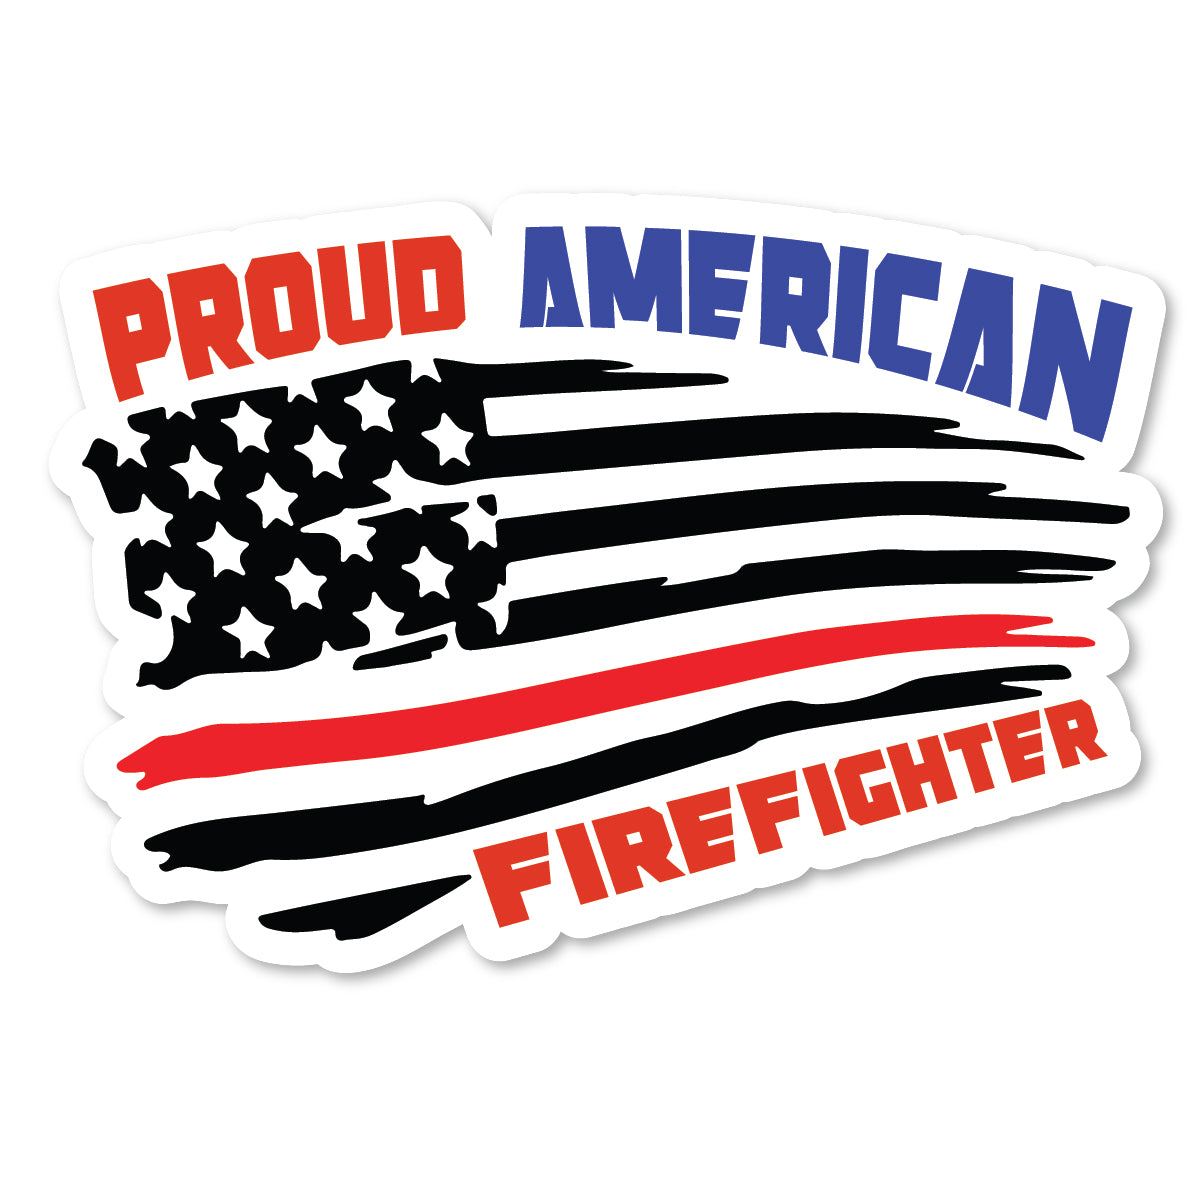 SP-129 | Proud American Firefighter